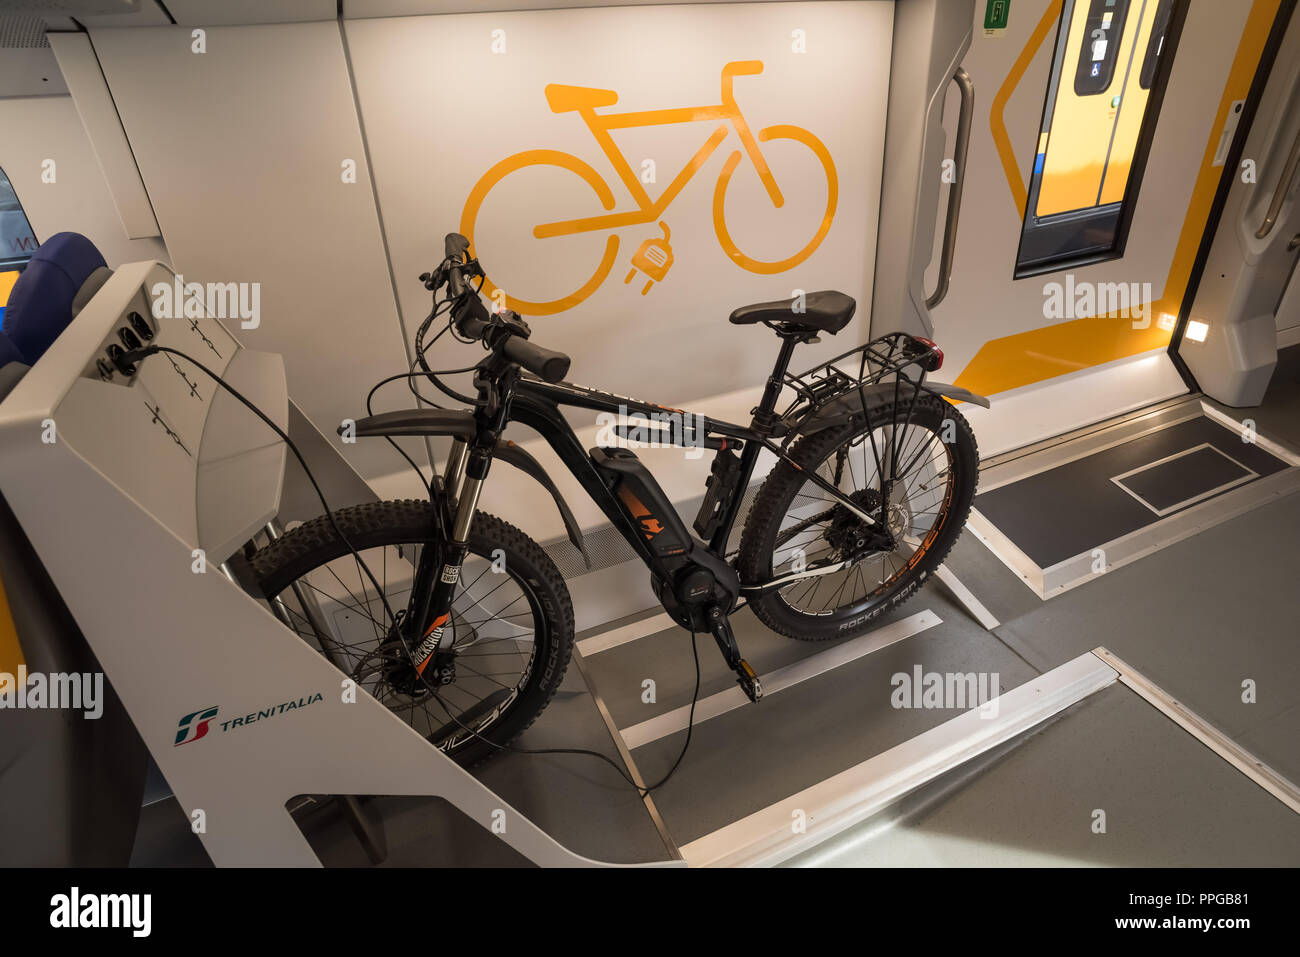 E-Bike-Ladestation in einem Pendlerzug Foto Stock